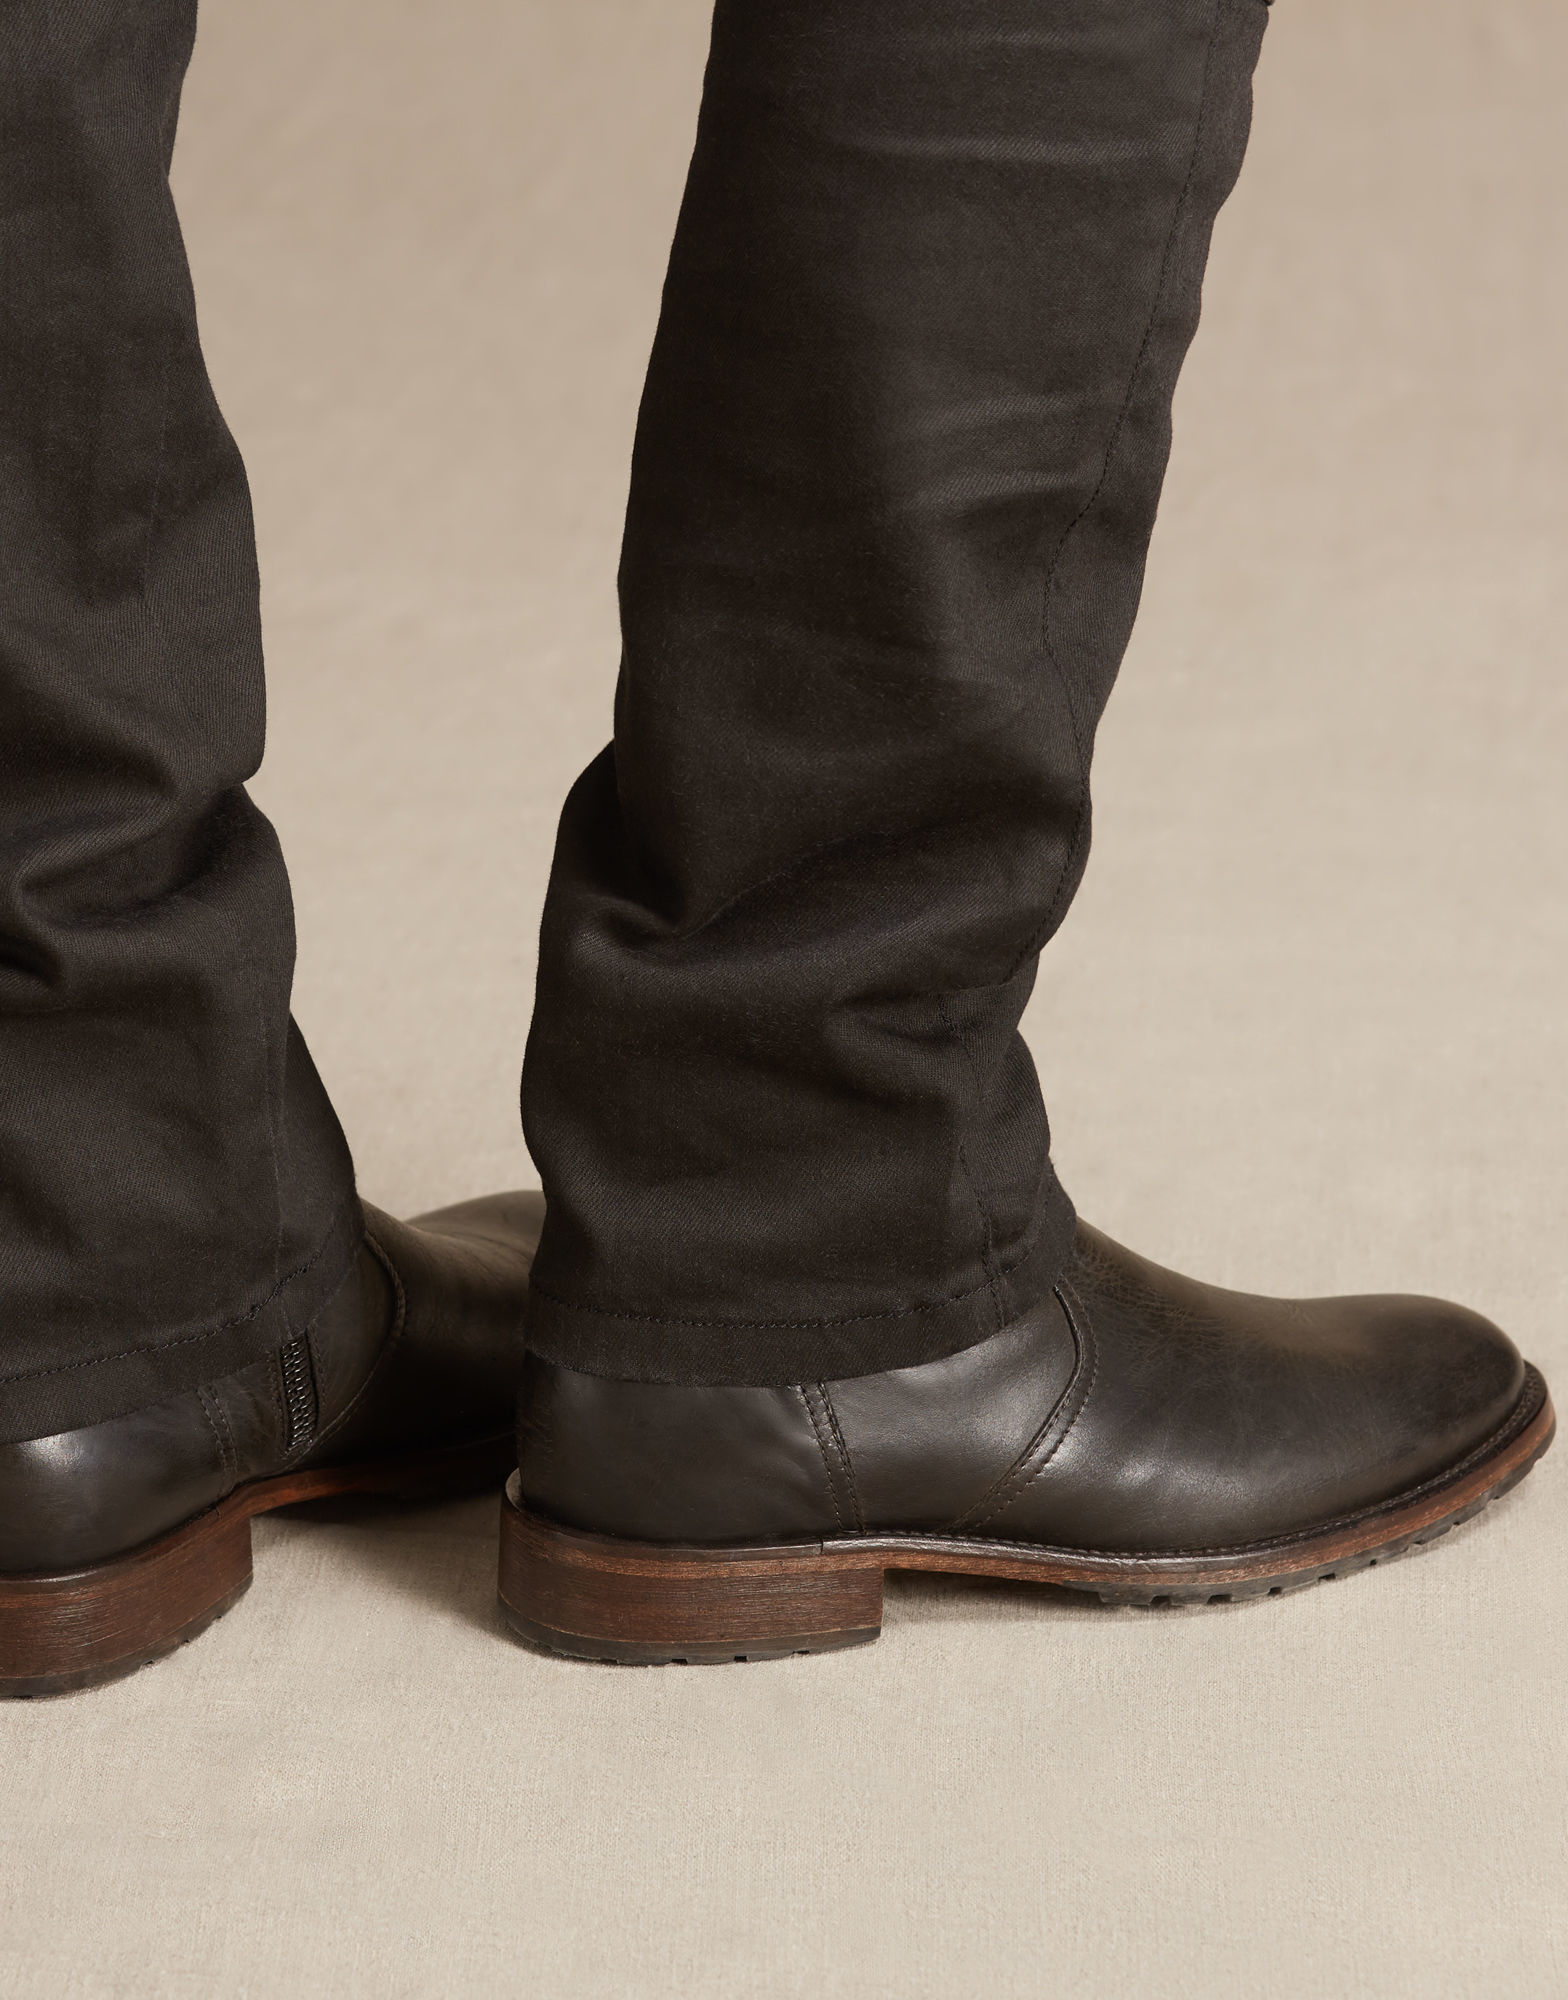 Belstaff Attwell Boots Clearance, 52% OFF | ilikepinga.com